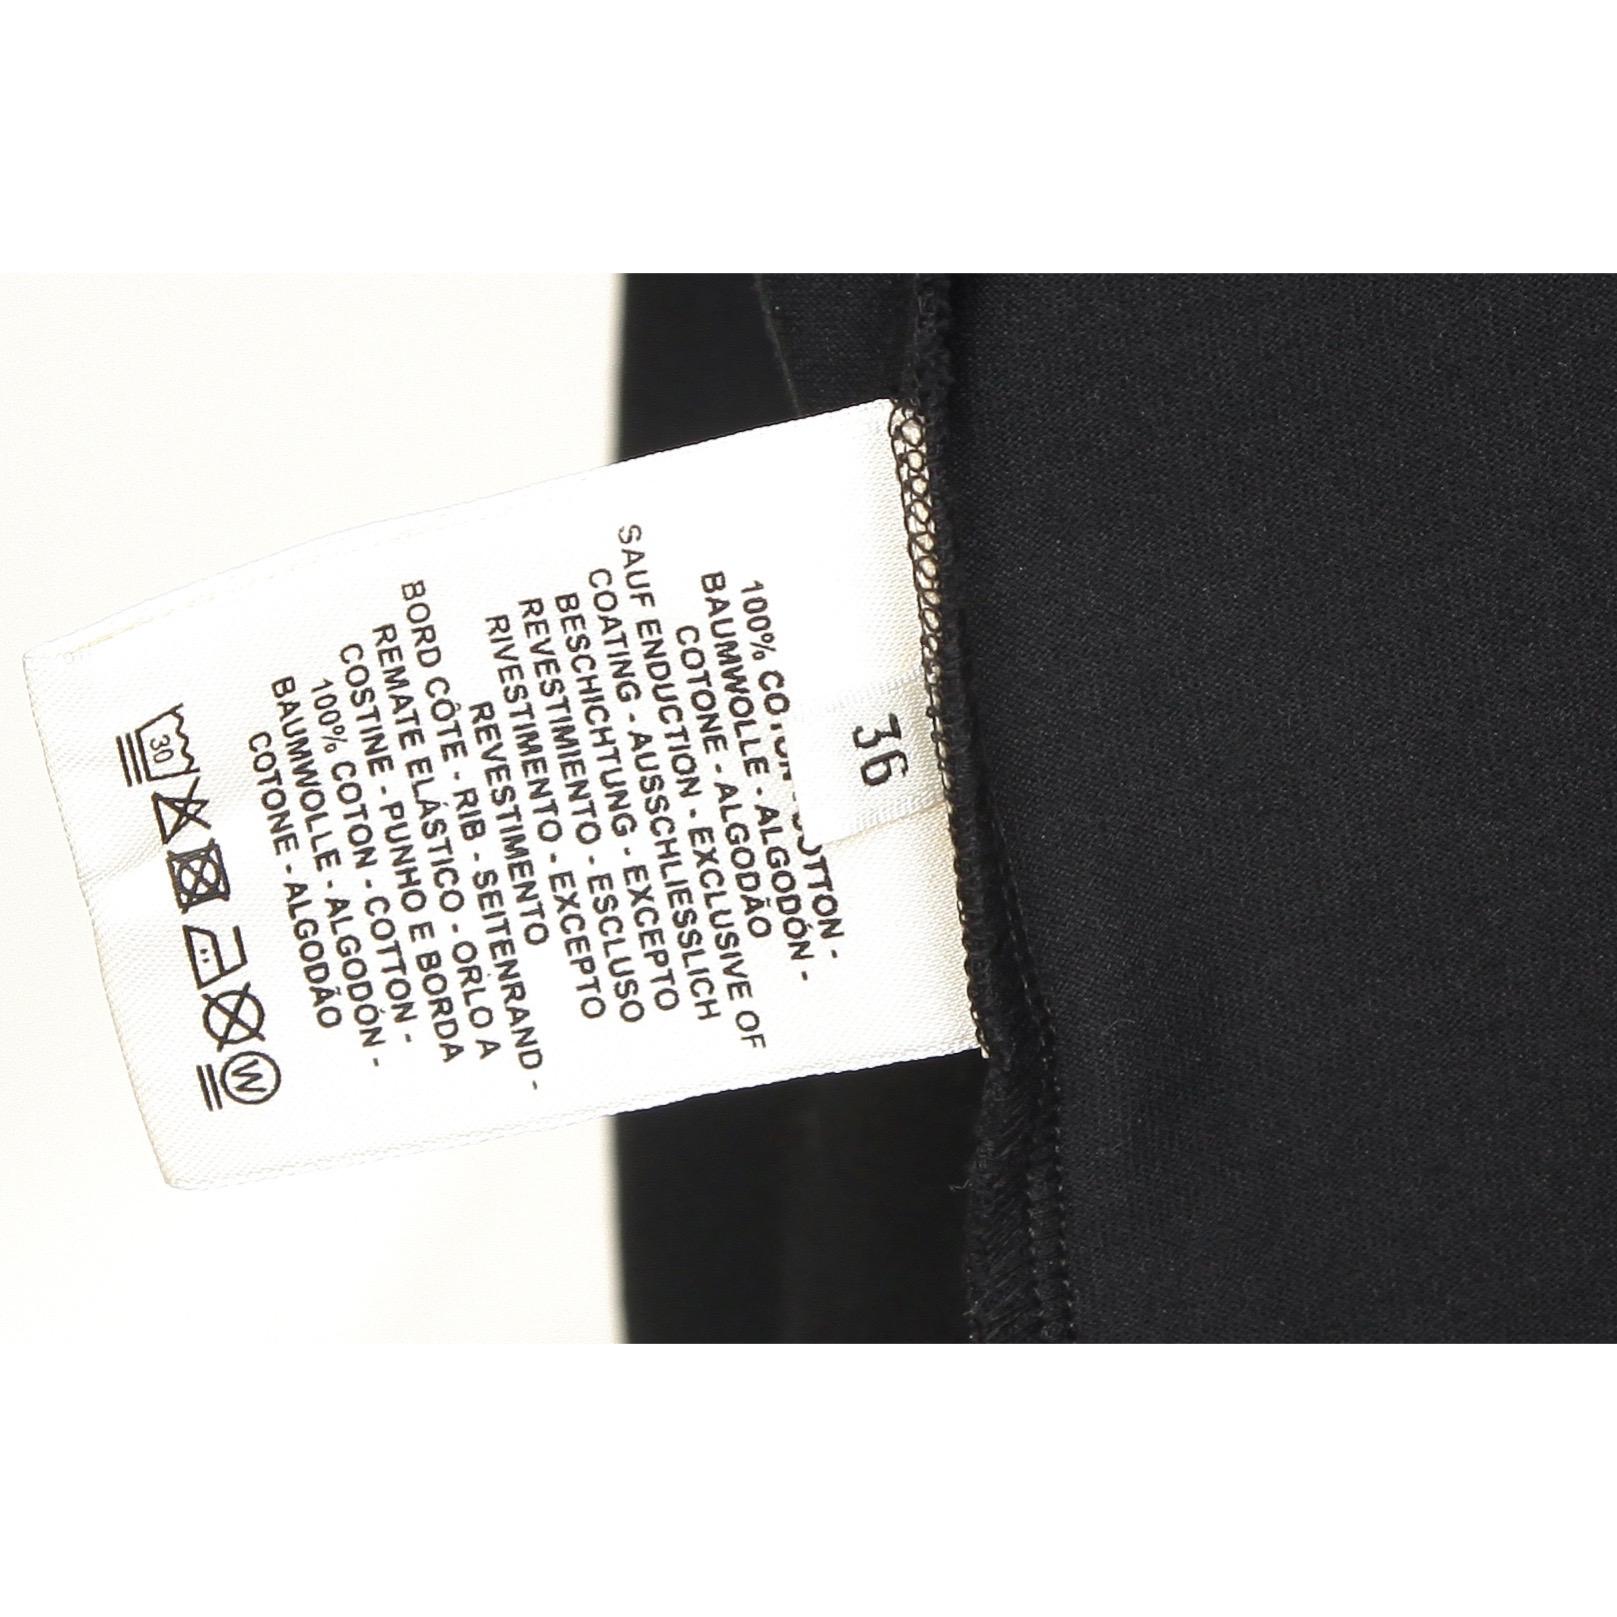 HERMES T-Shirt Top Black White CLIC CLAC Print Pocket Short Sleeve Crew Neck 36 For Sale 2